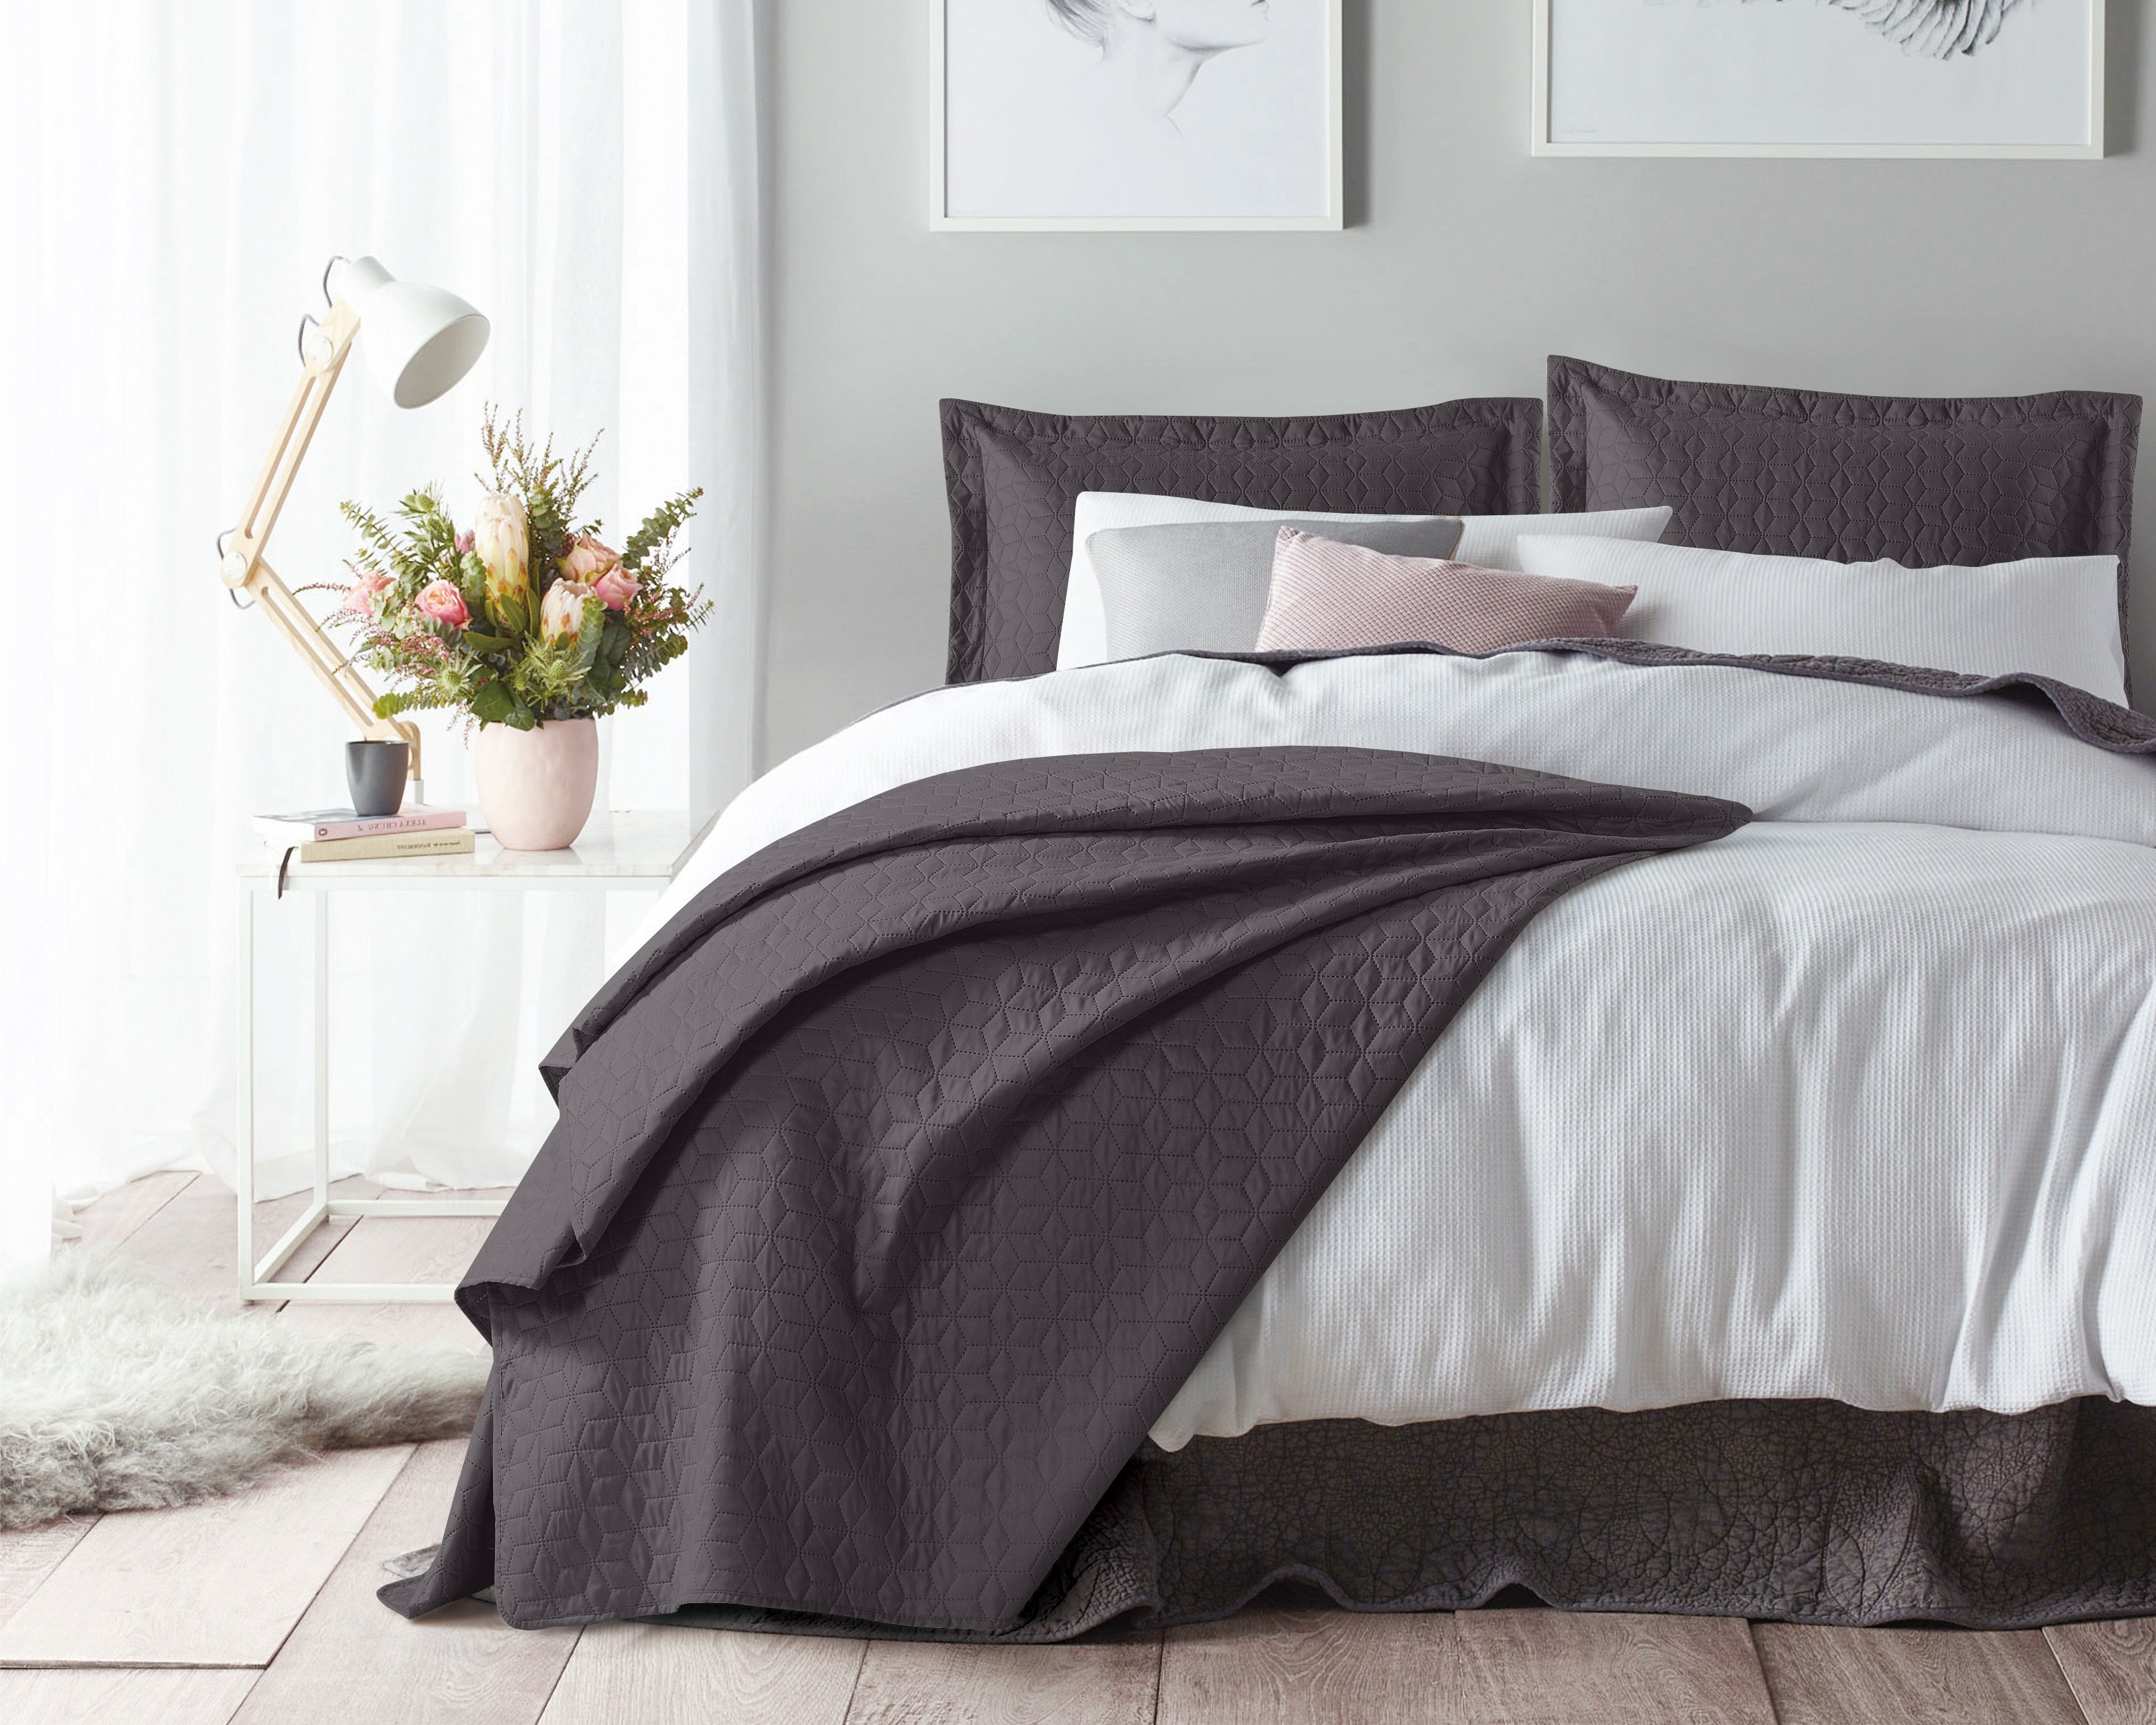 Billede af Wayfair sengetæppe, antracit grå, 260 x 250 cm